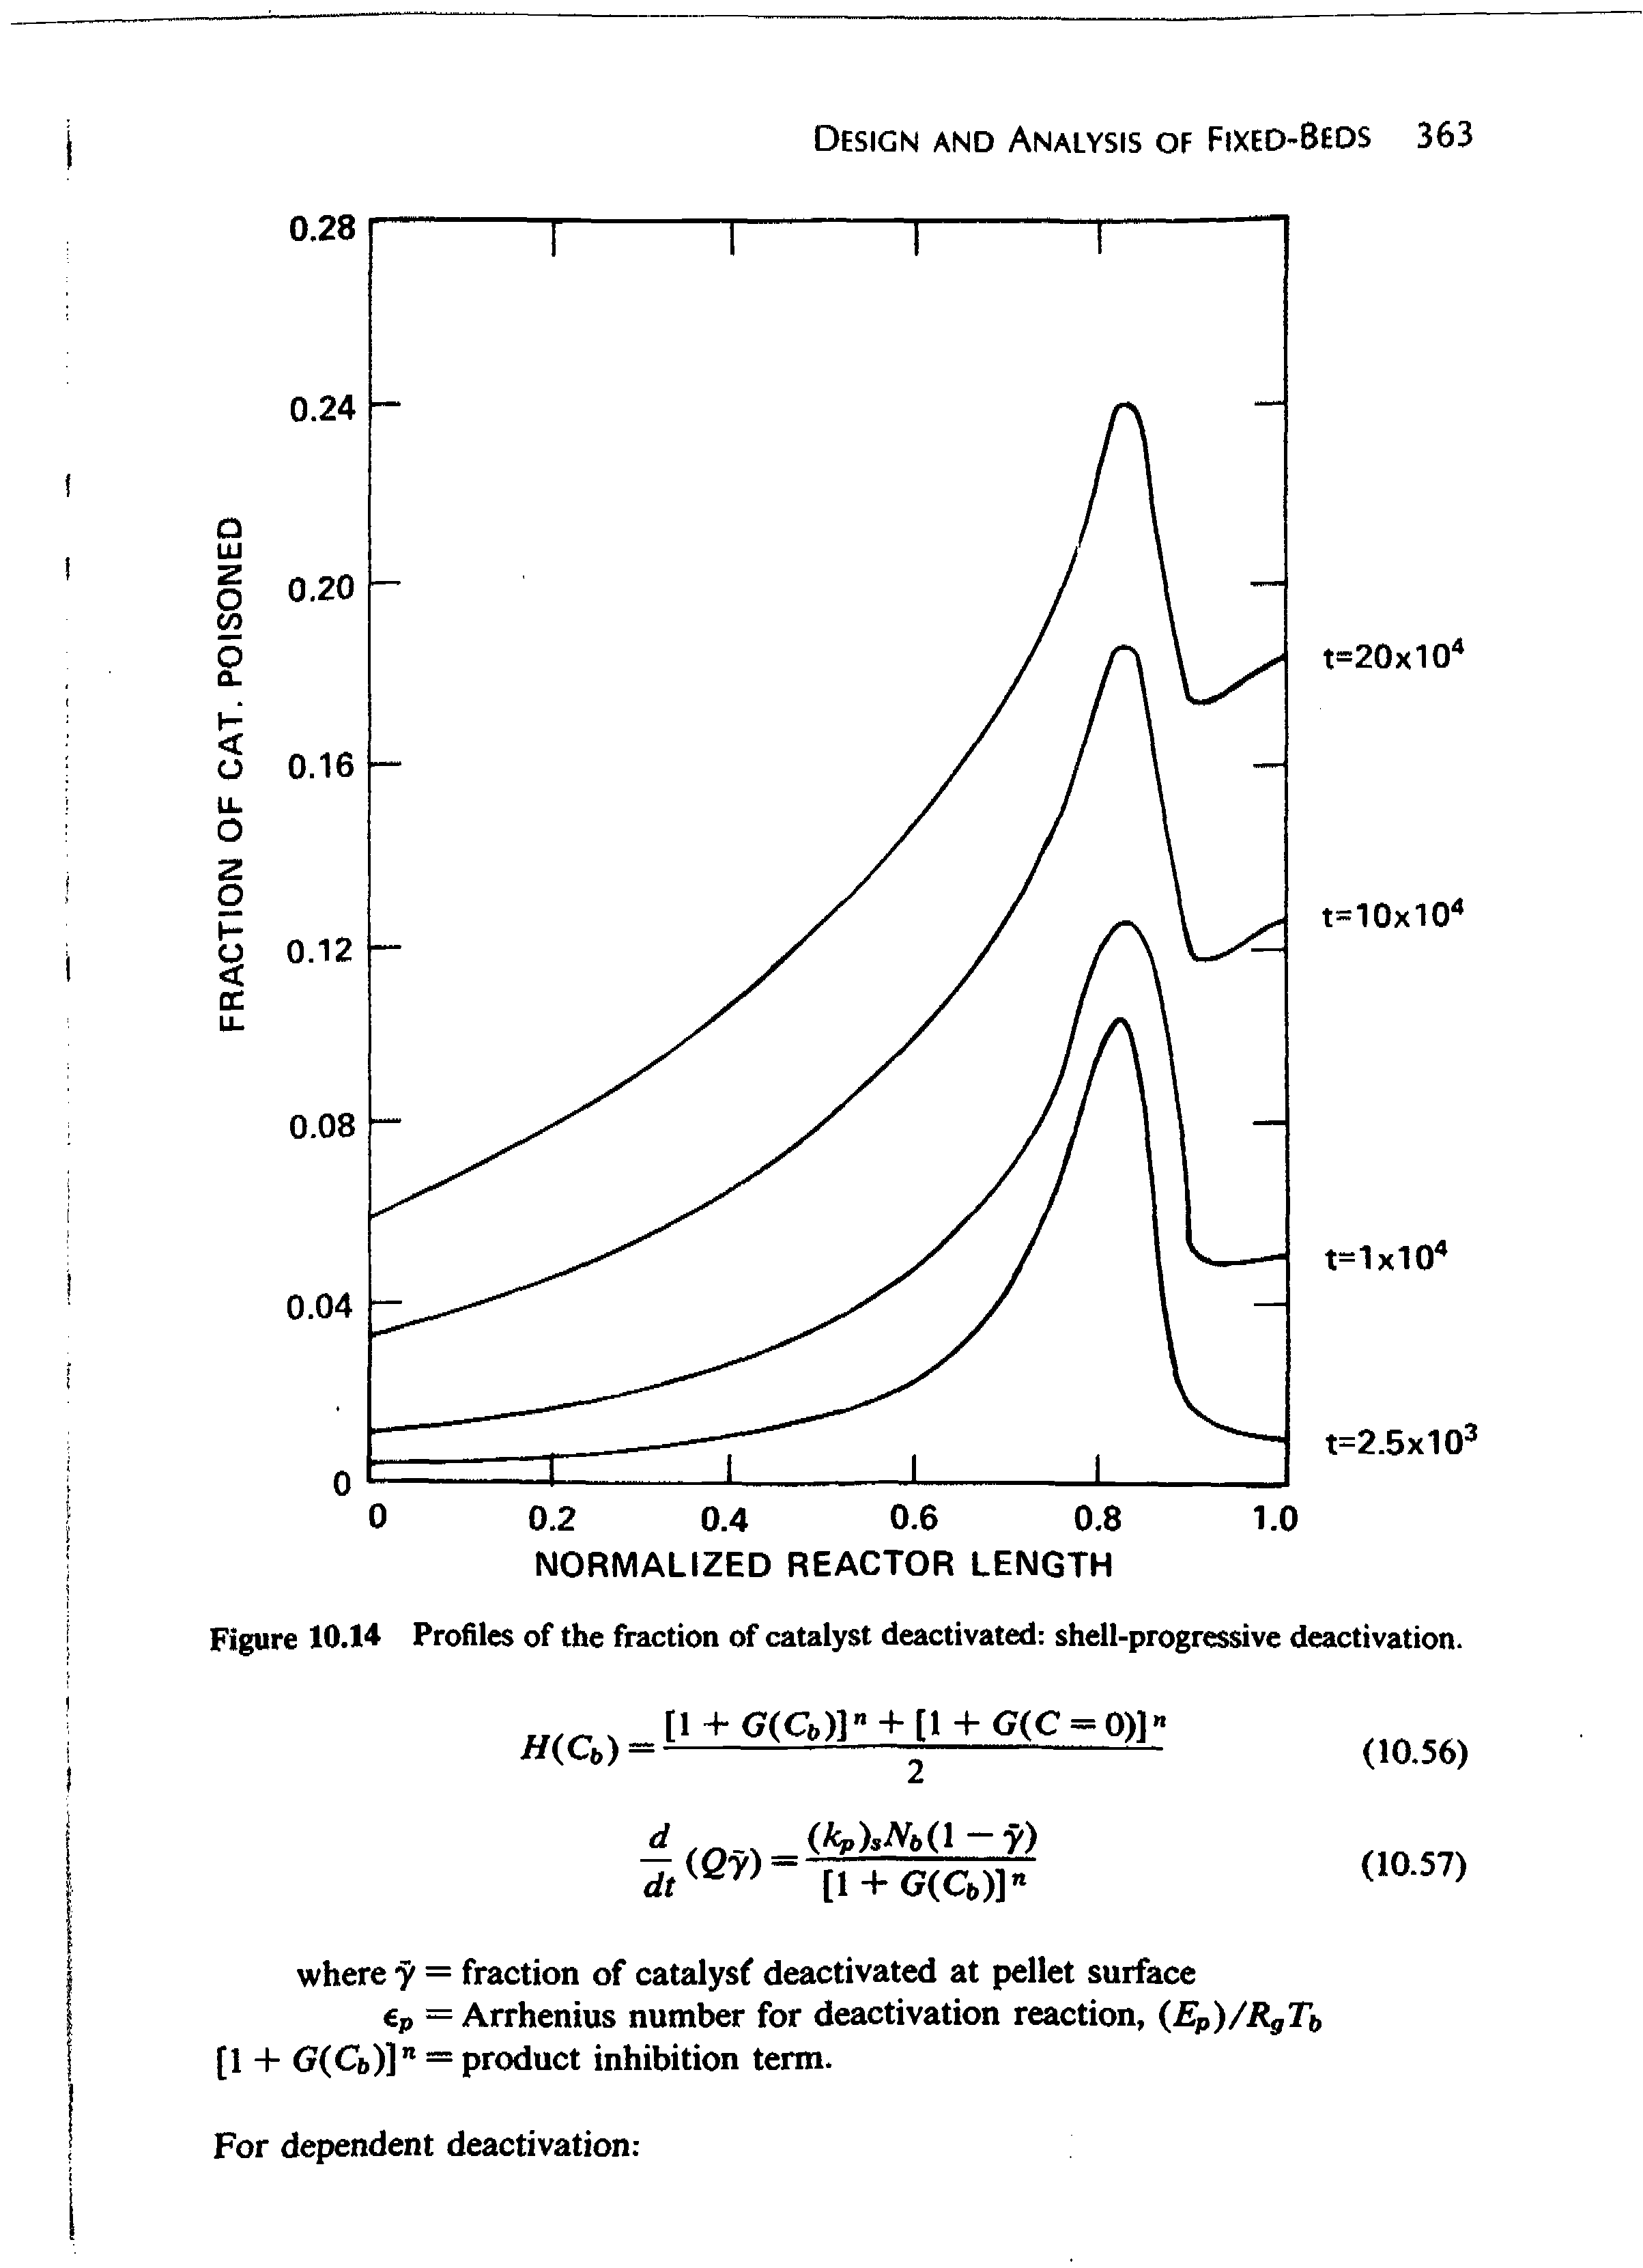 Figure 10.14 Profiles of the fraction of catalyst deactivated shell-progressive deactivation.